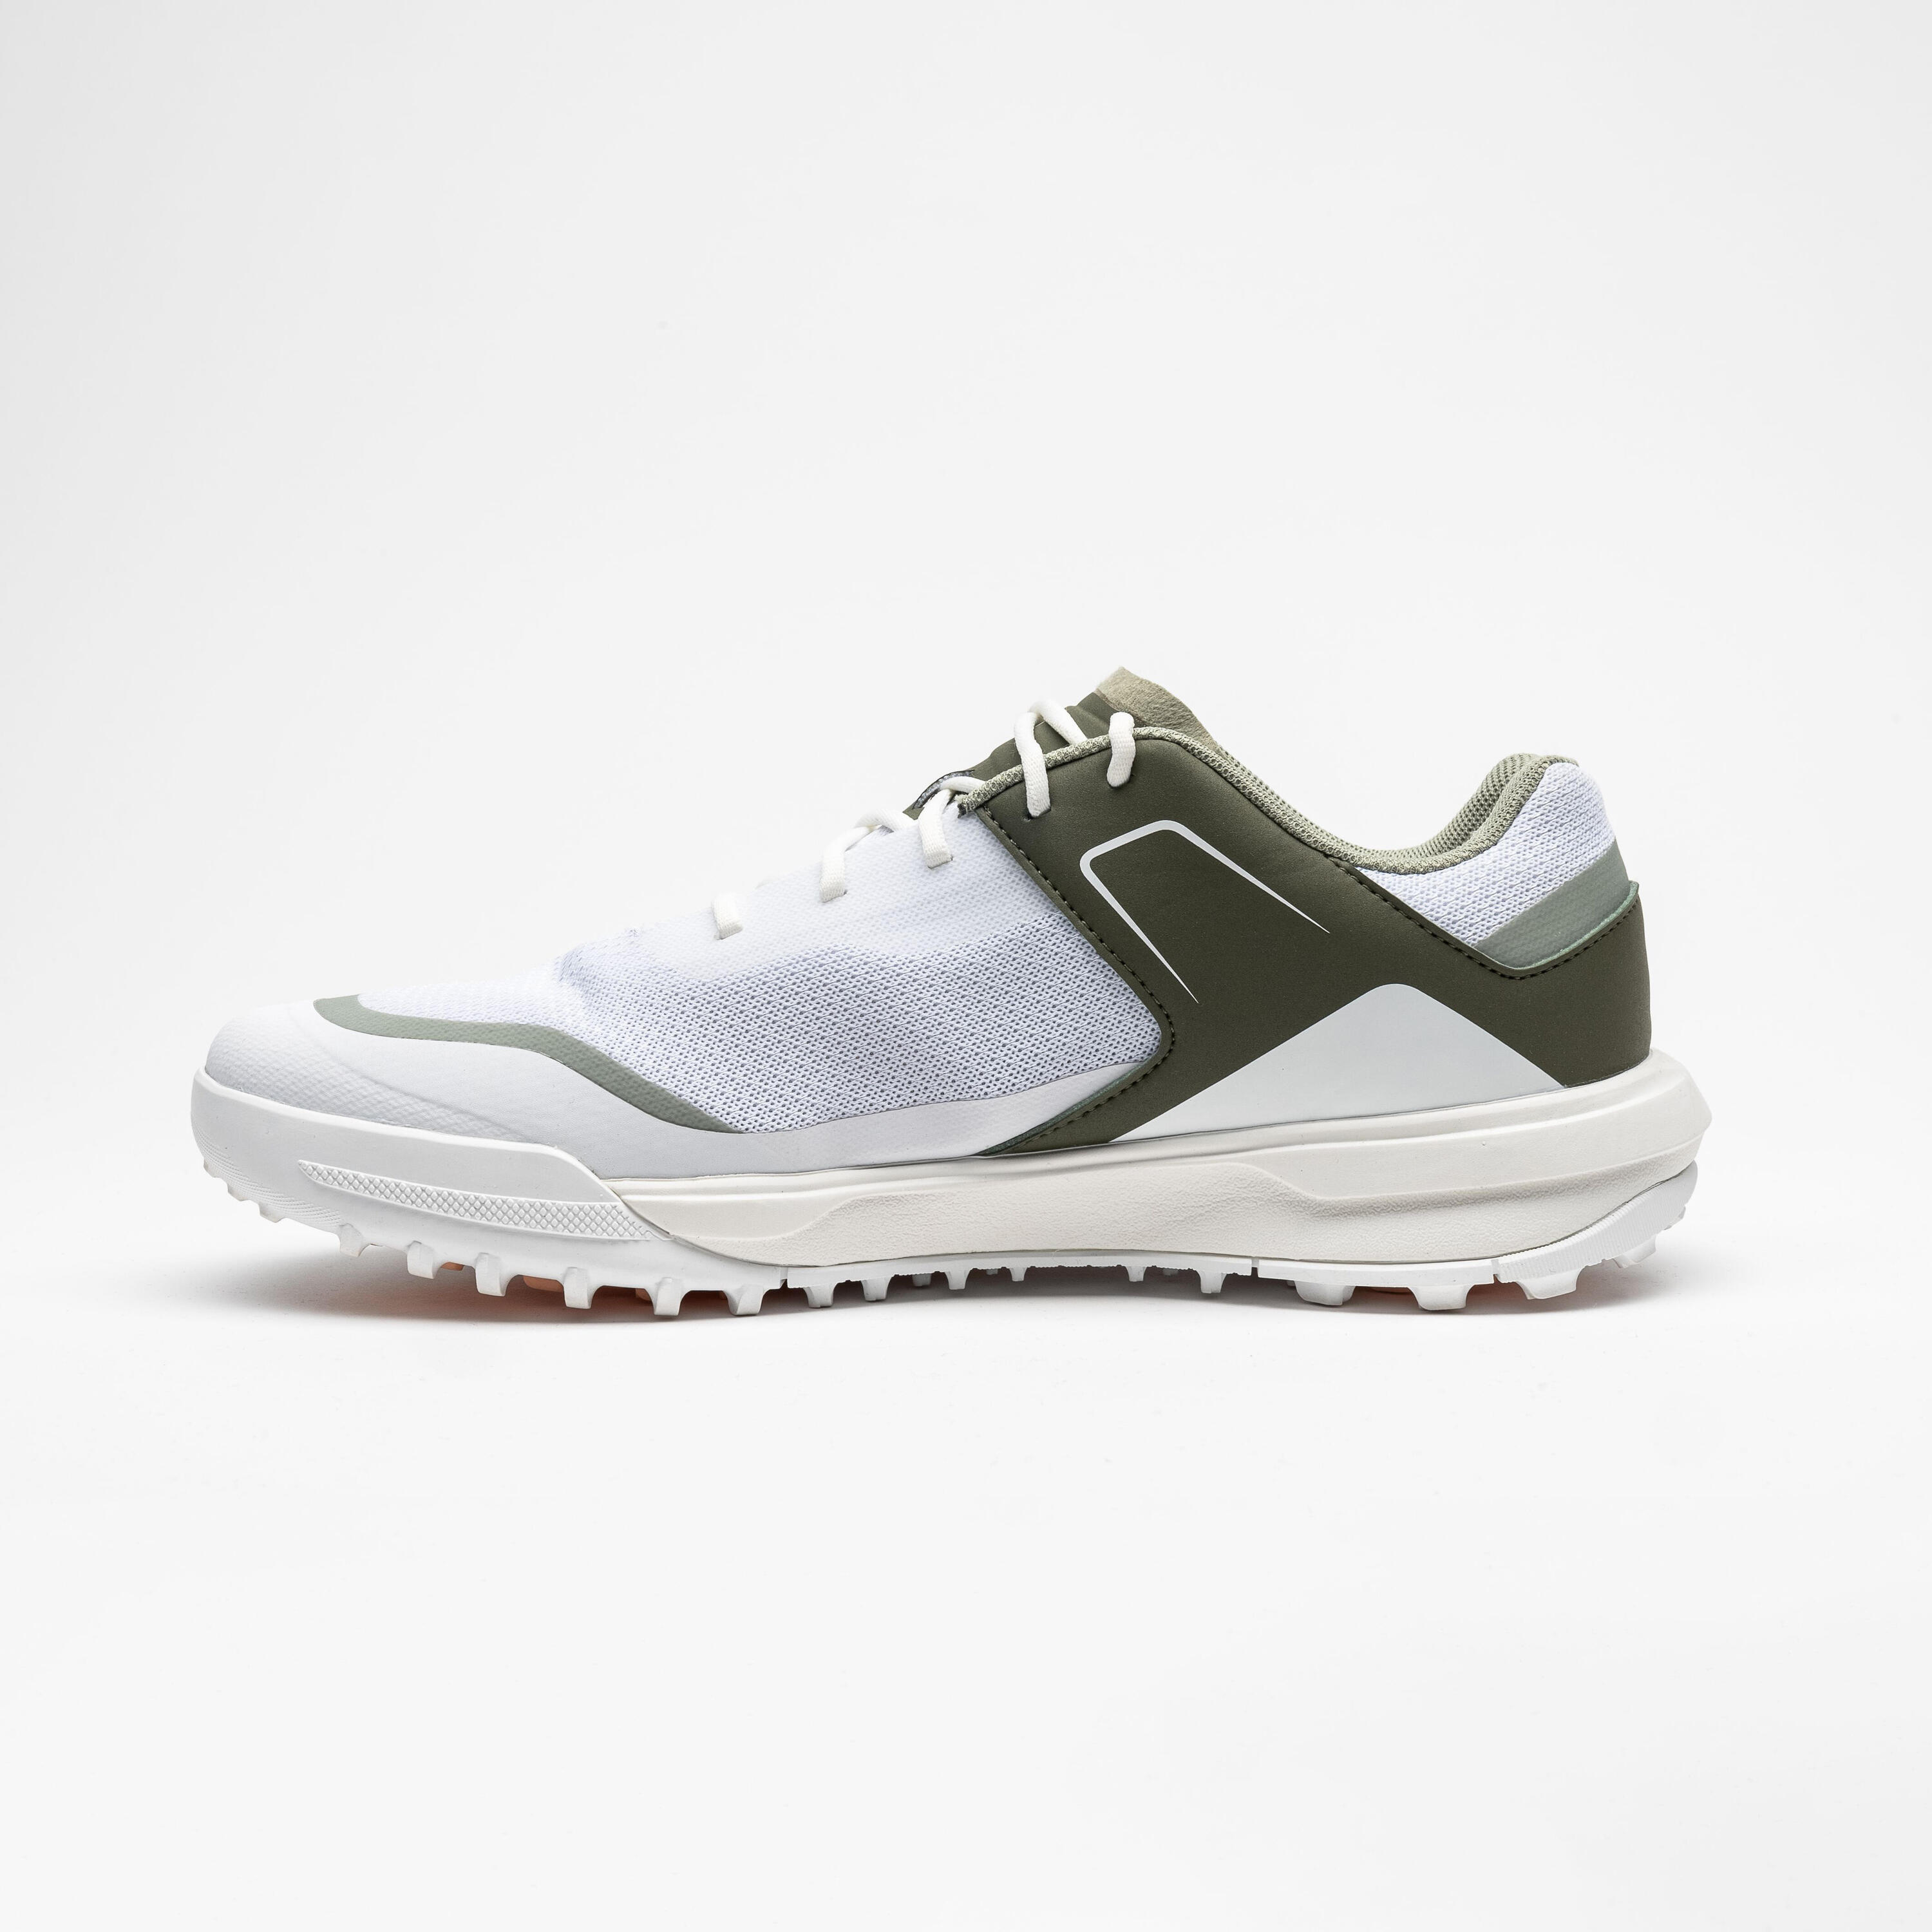 Men's Golf Breathable Shoes - WW 500 Khaki & White 2/6